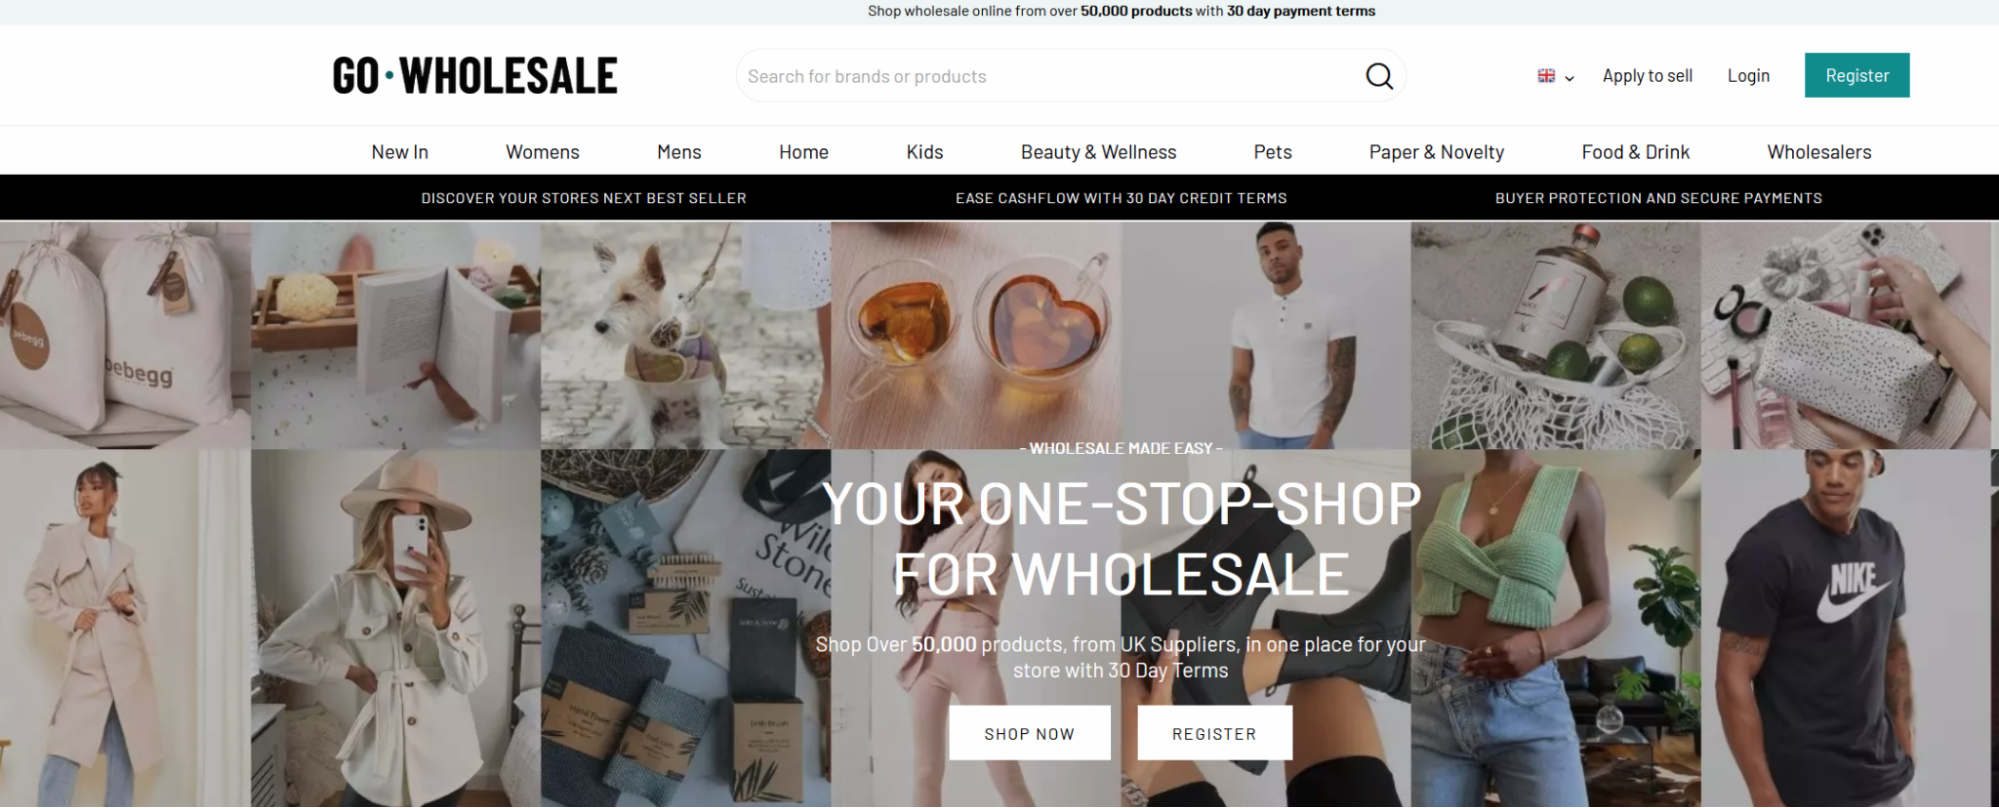 go wholesale homepage screenshot